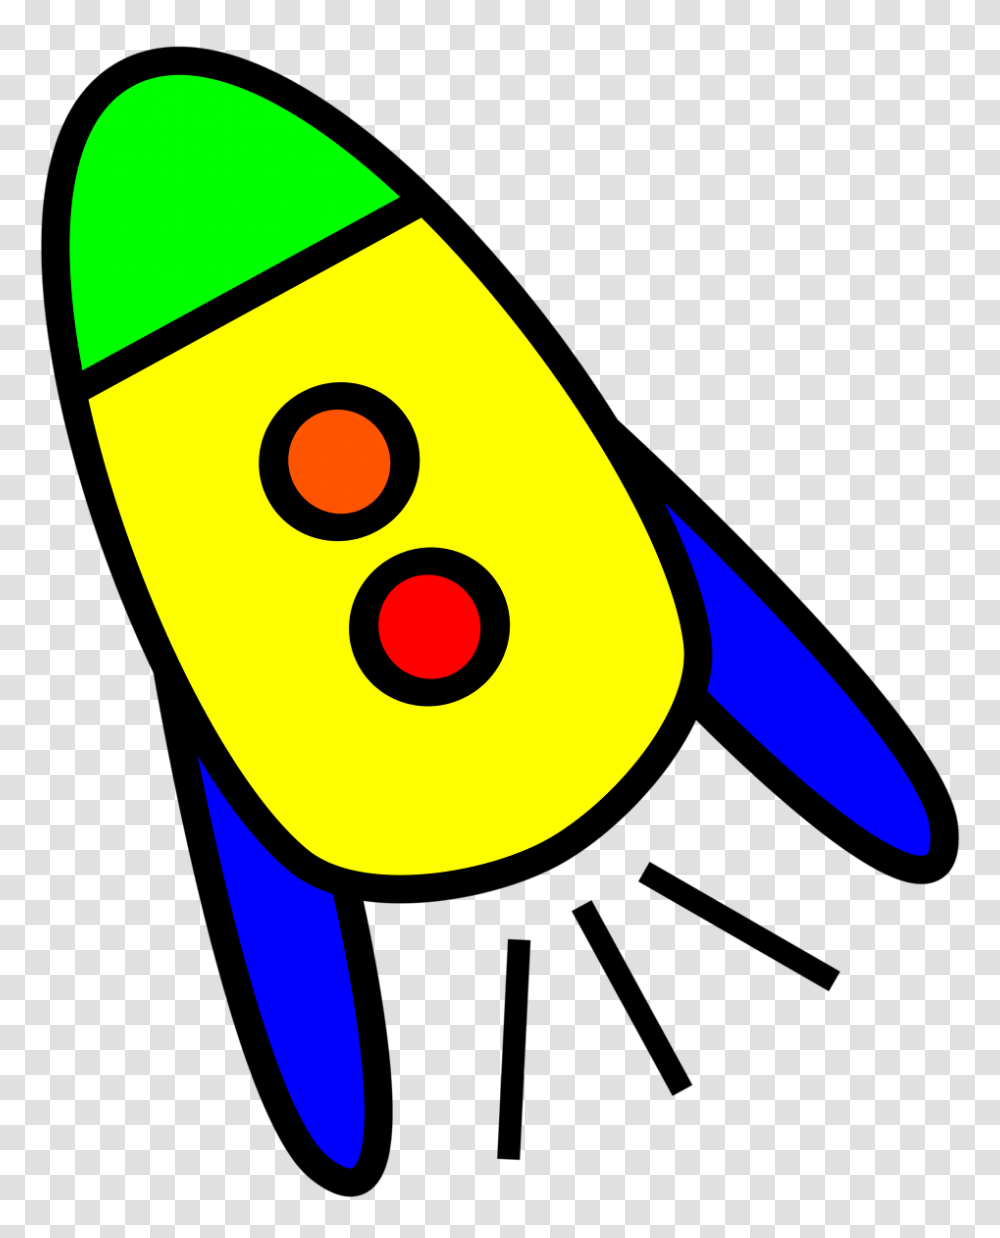 Rocket Free Stock Photo Illustration Of A Yellow Rocket, Food, Egg Transparent Png